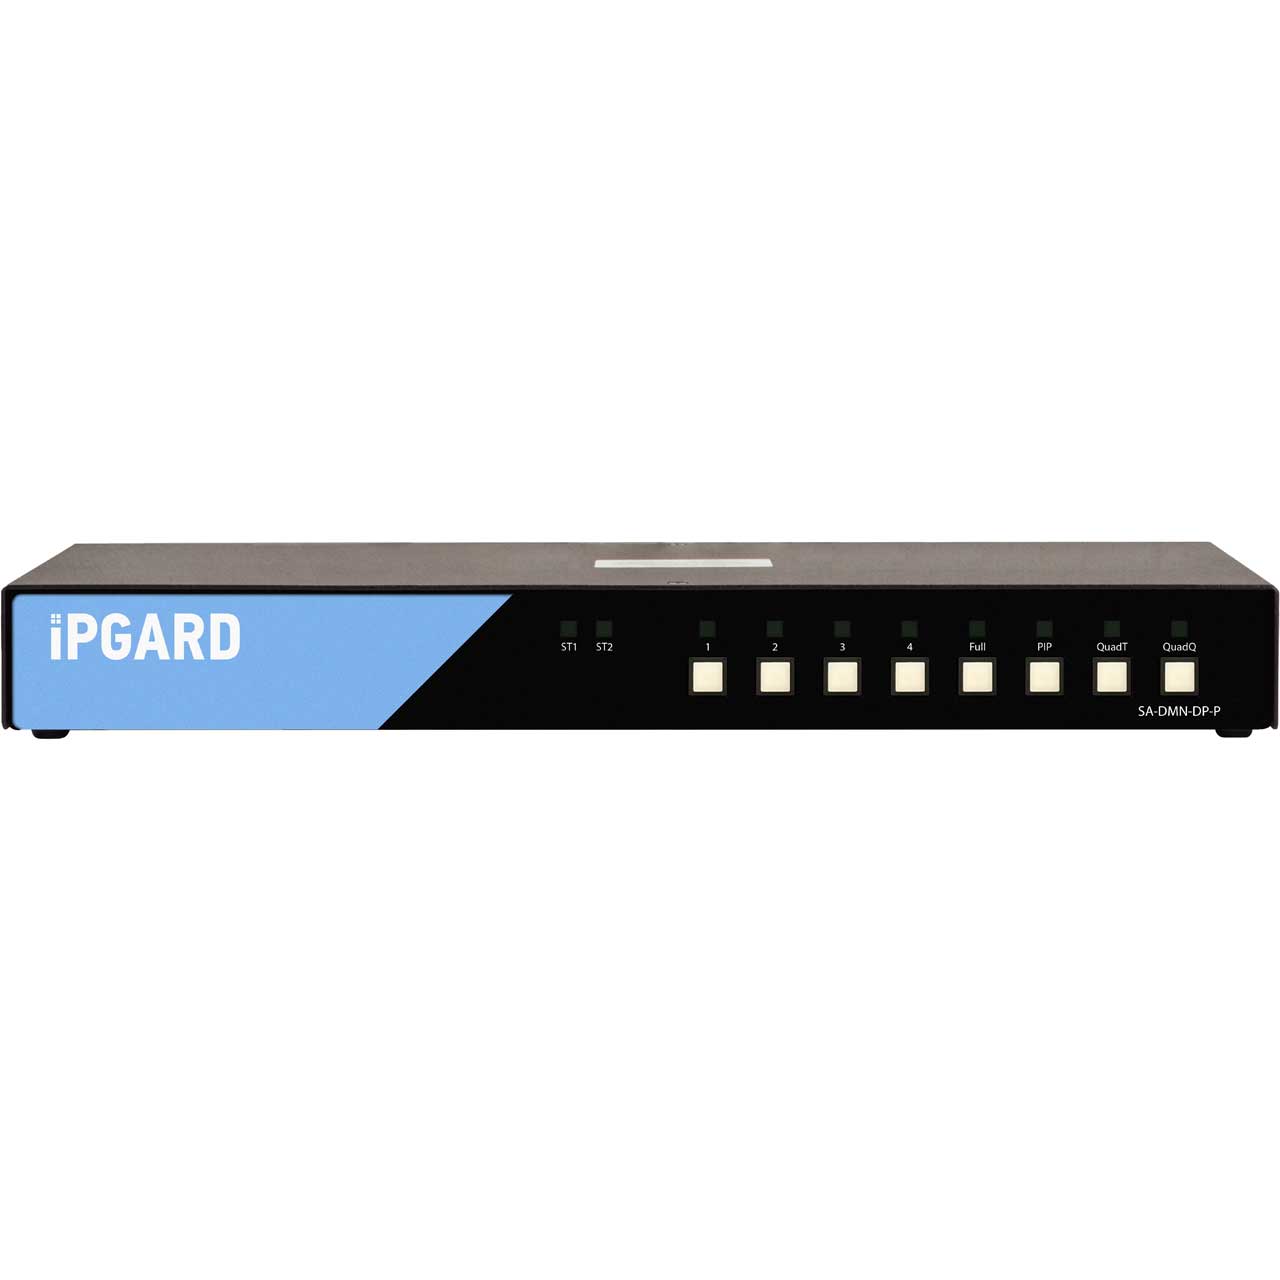 SmartAVI SA-DMN-DP-P 4-Port SH Secure DisplayPort KVM with Audio - CAC and preview screen SA-DMN-DP-P